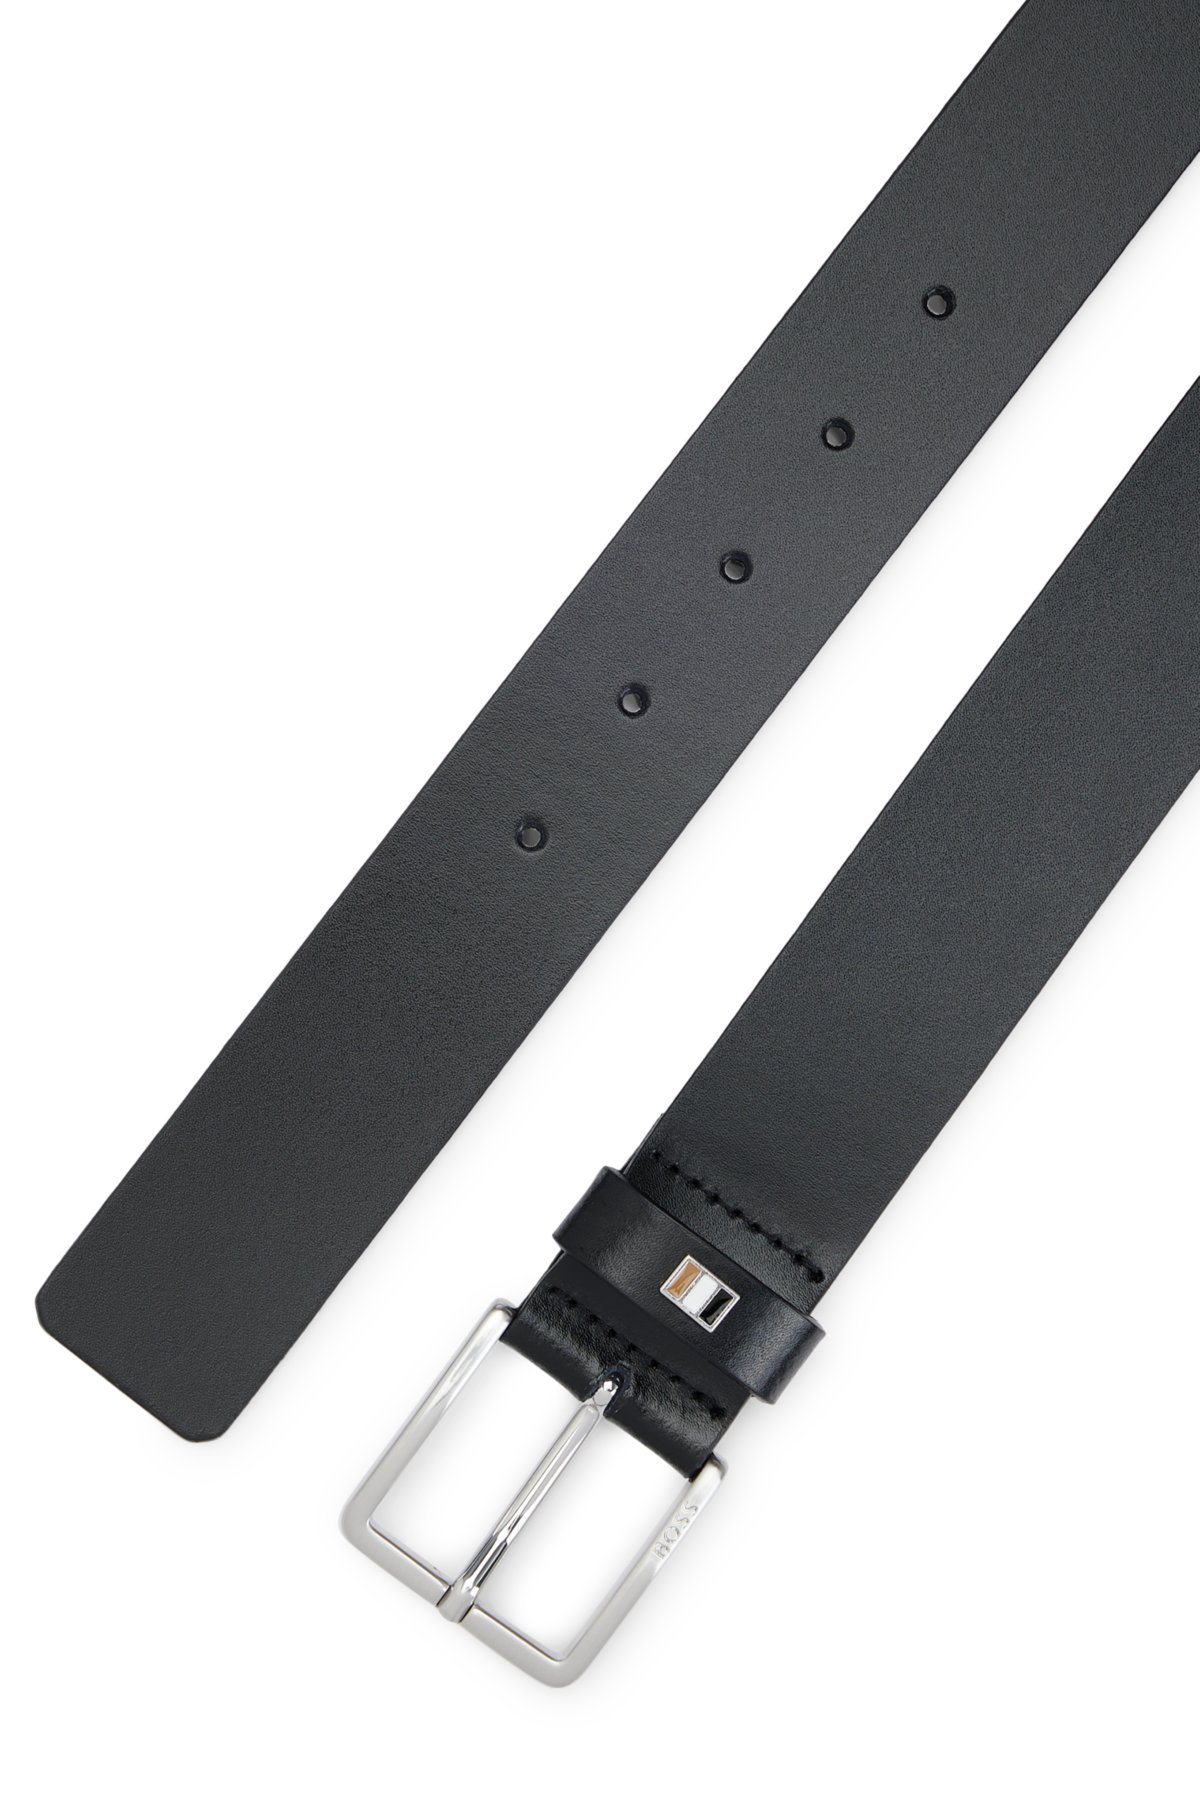 Italian-leather belt with signature-stripe keeper trim, Black